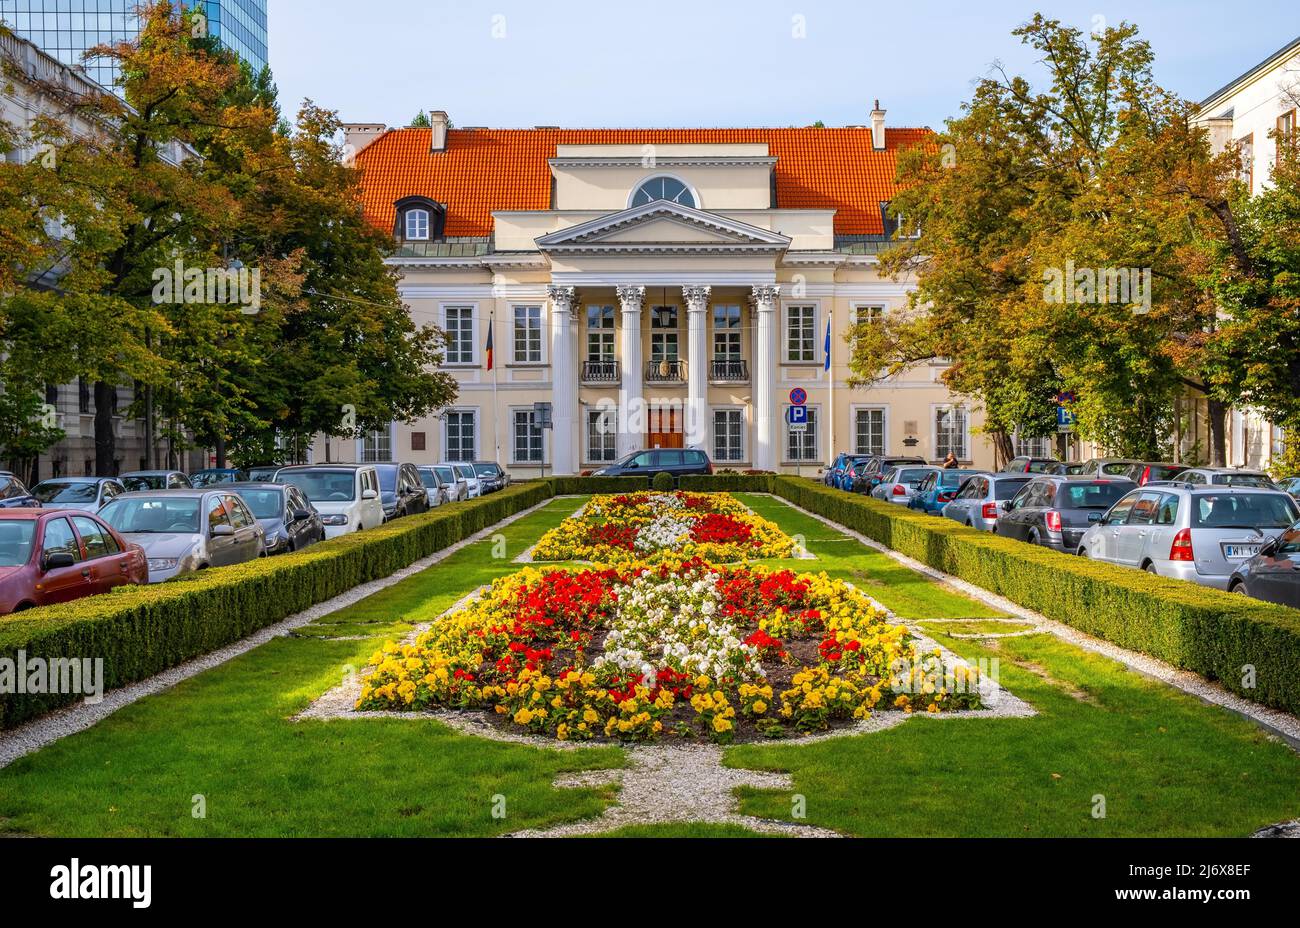 Warsaw, Poland - September 19, 2020: Historic Palac Mniszchow Mniszech Palace presently Belgium Embassy at Senatorska street in Srodmiescie city cente Stock Photo